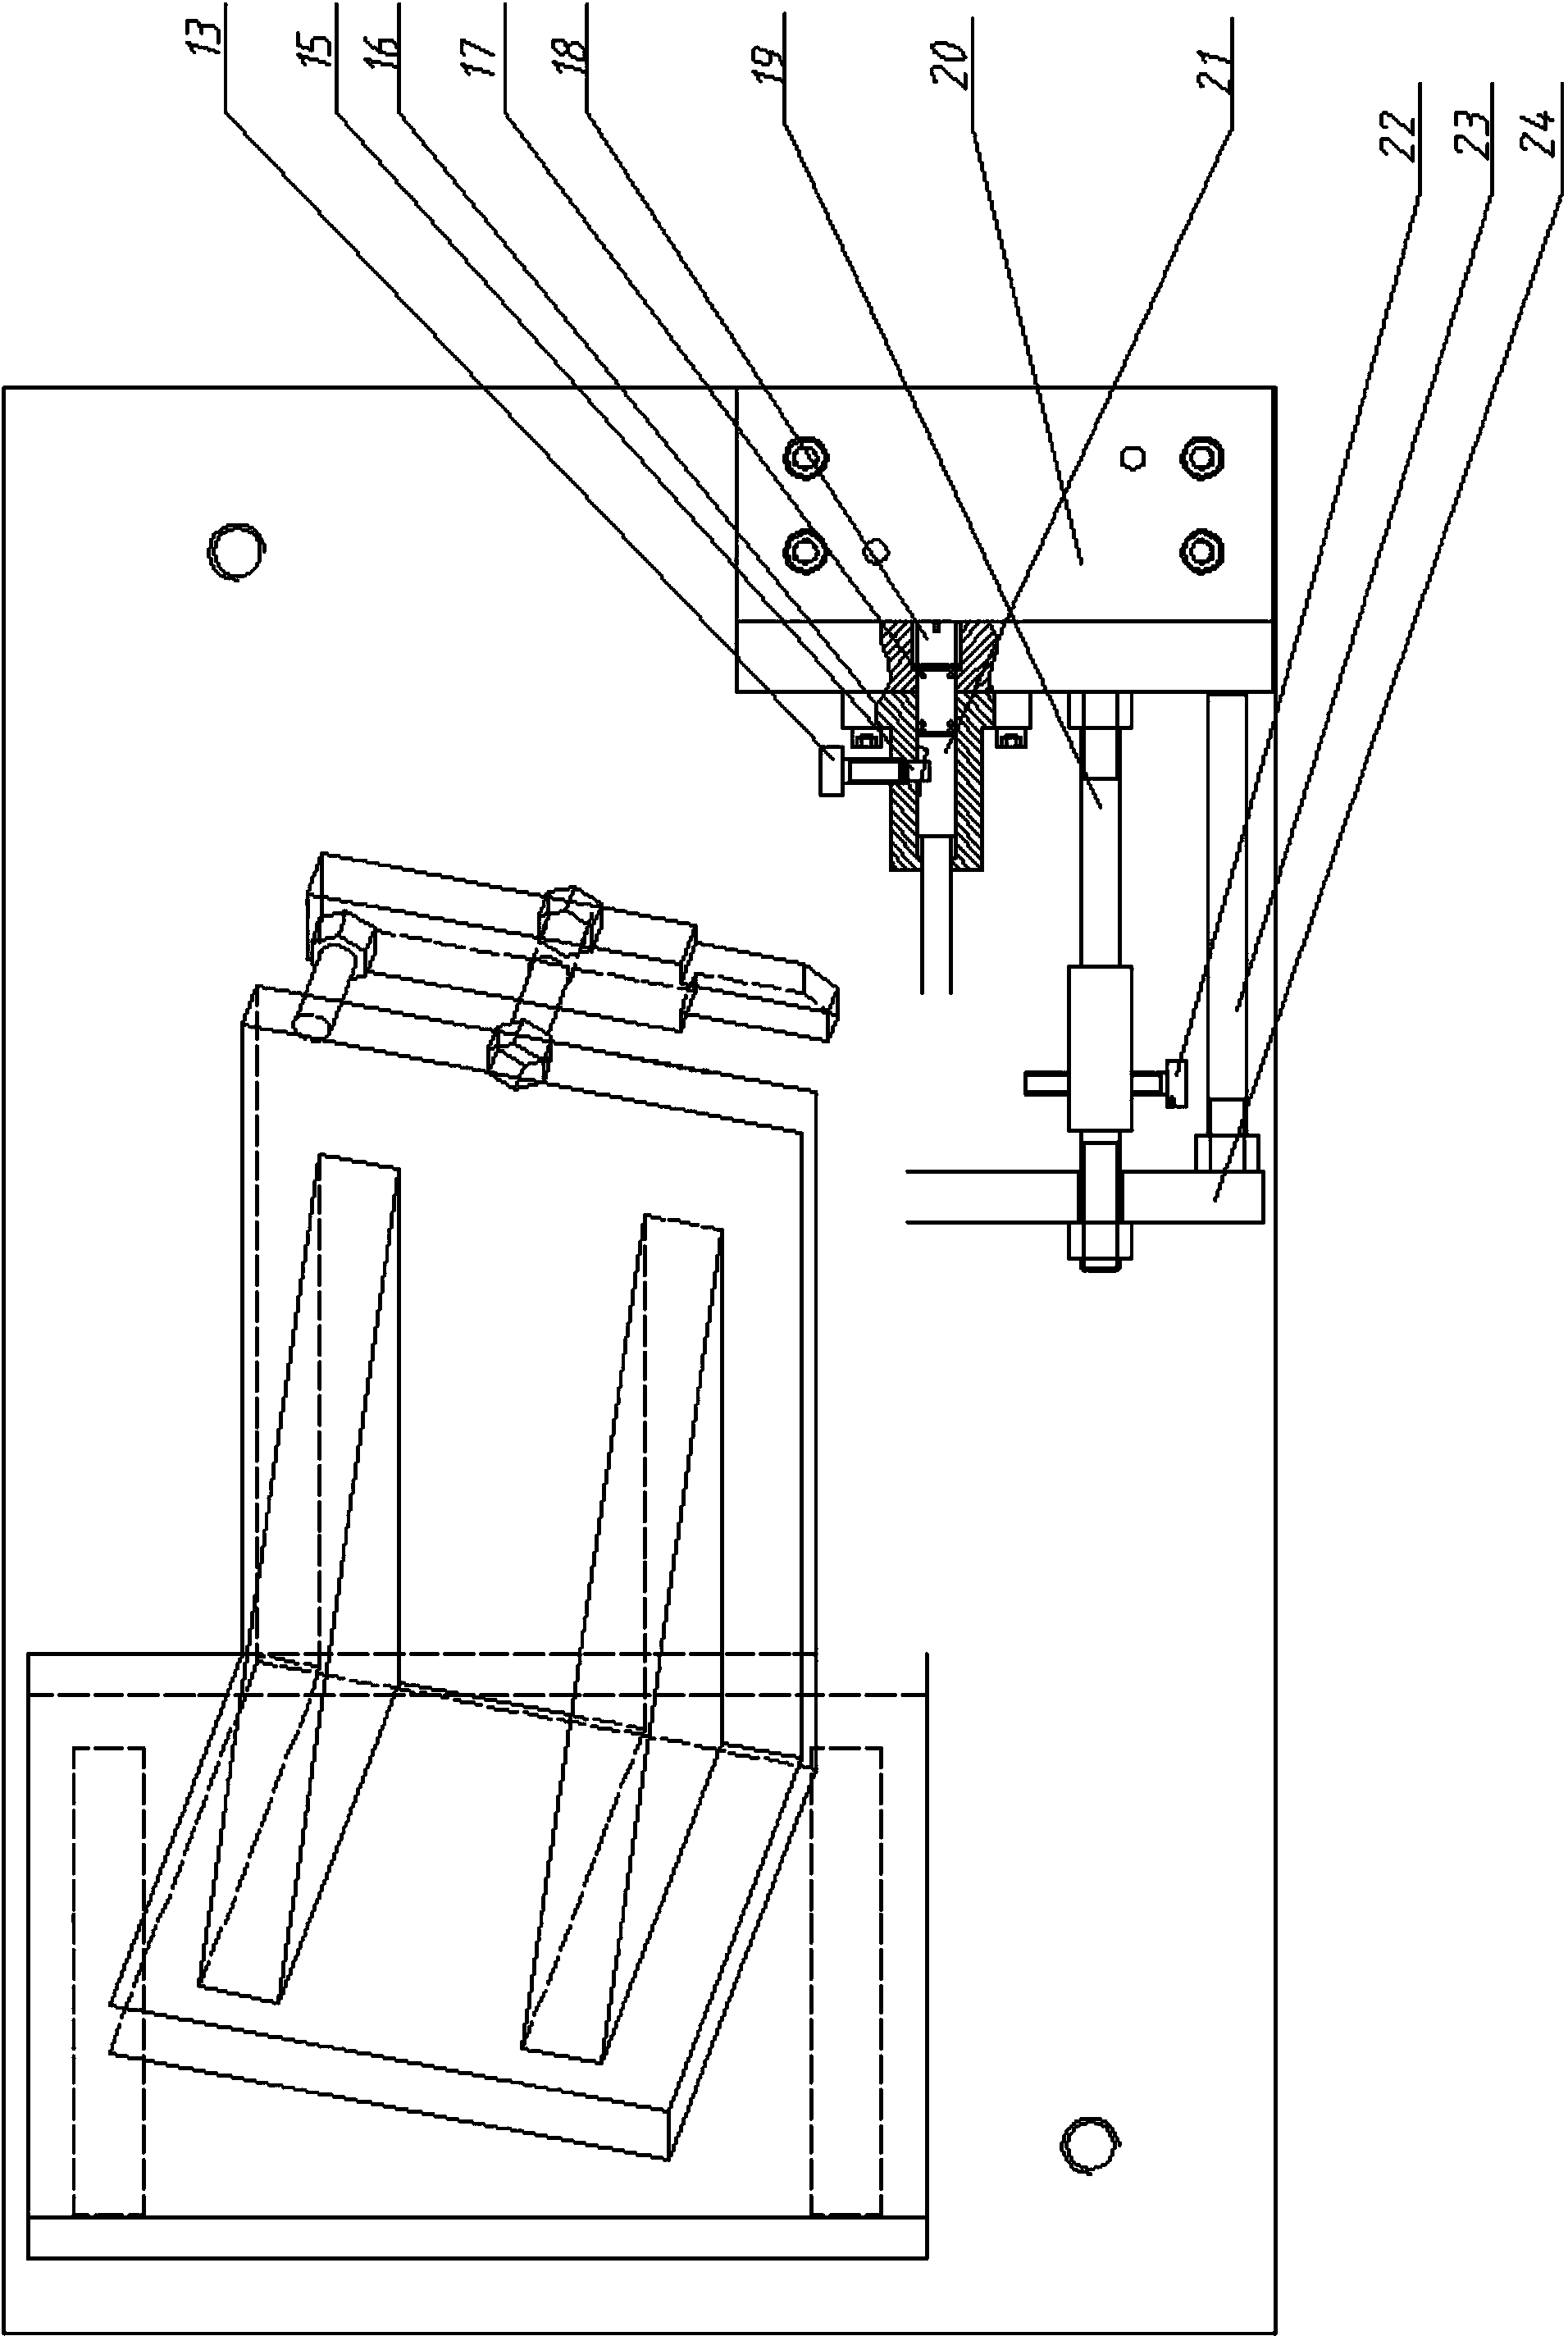 Aslant intake manifold orifice milling locating device